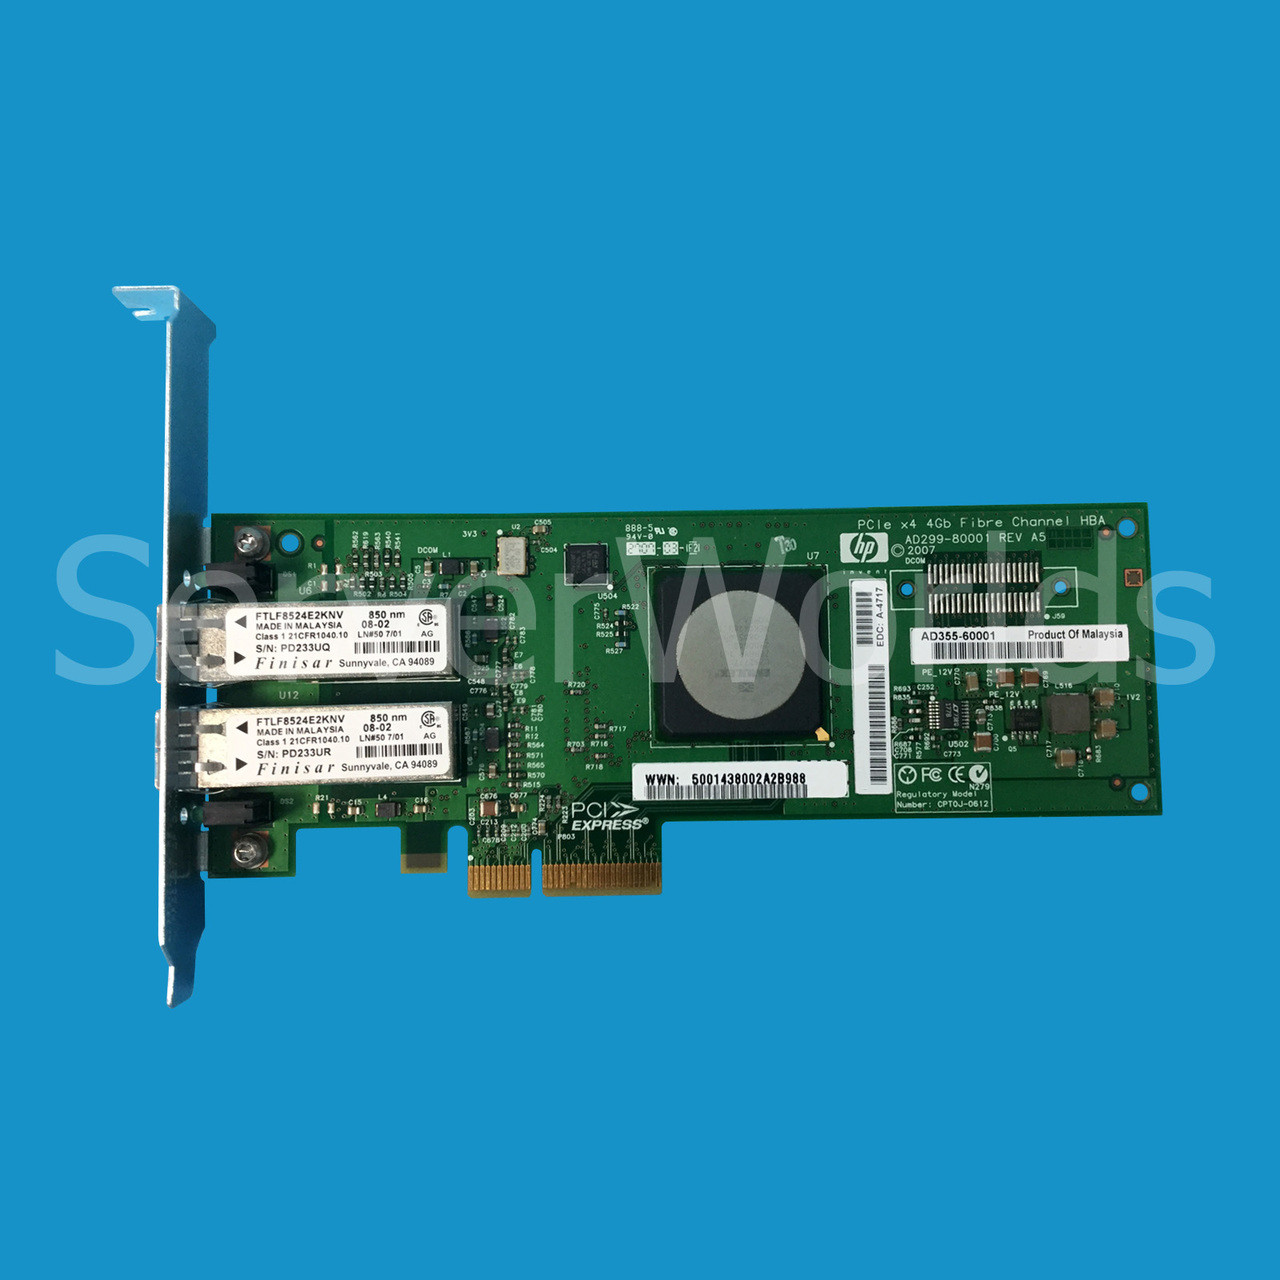 HP AD355A 4GB Dual Port Fibre Channel HBA AD355-60001, AD355-67001